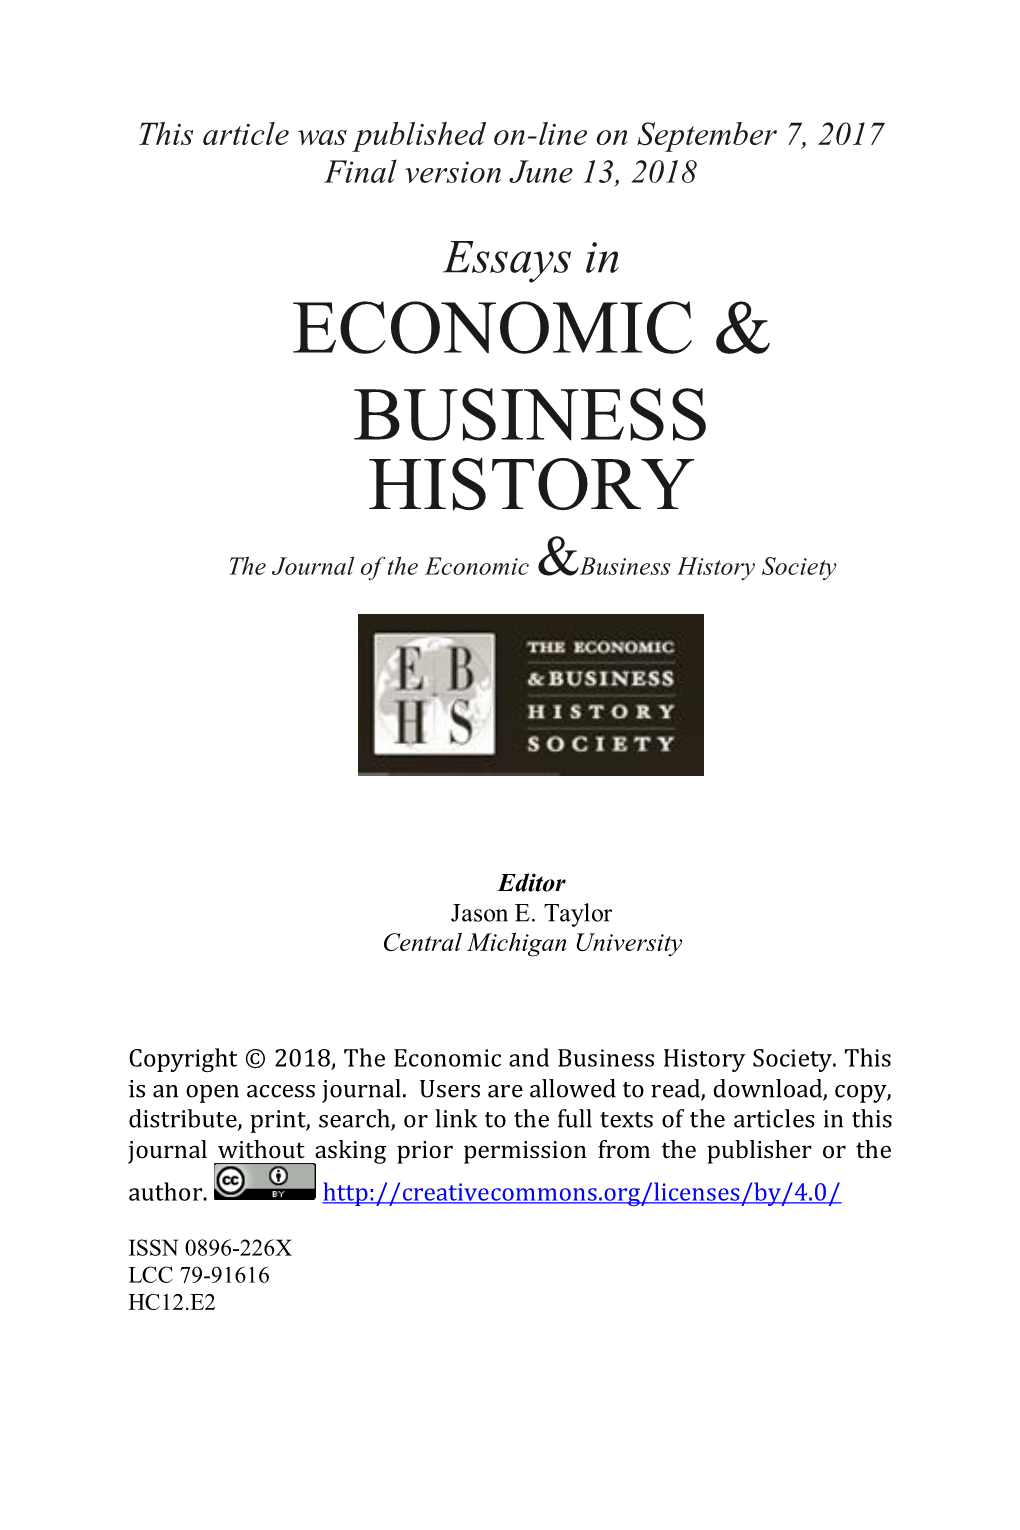 Economic & Business History